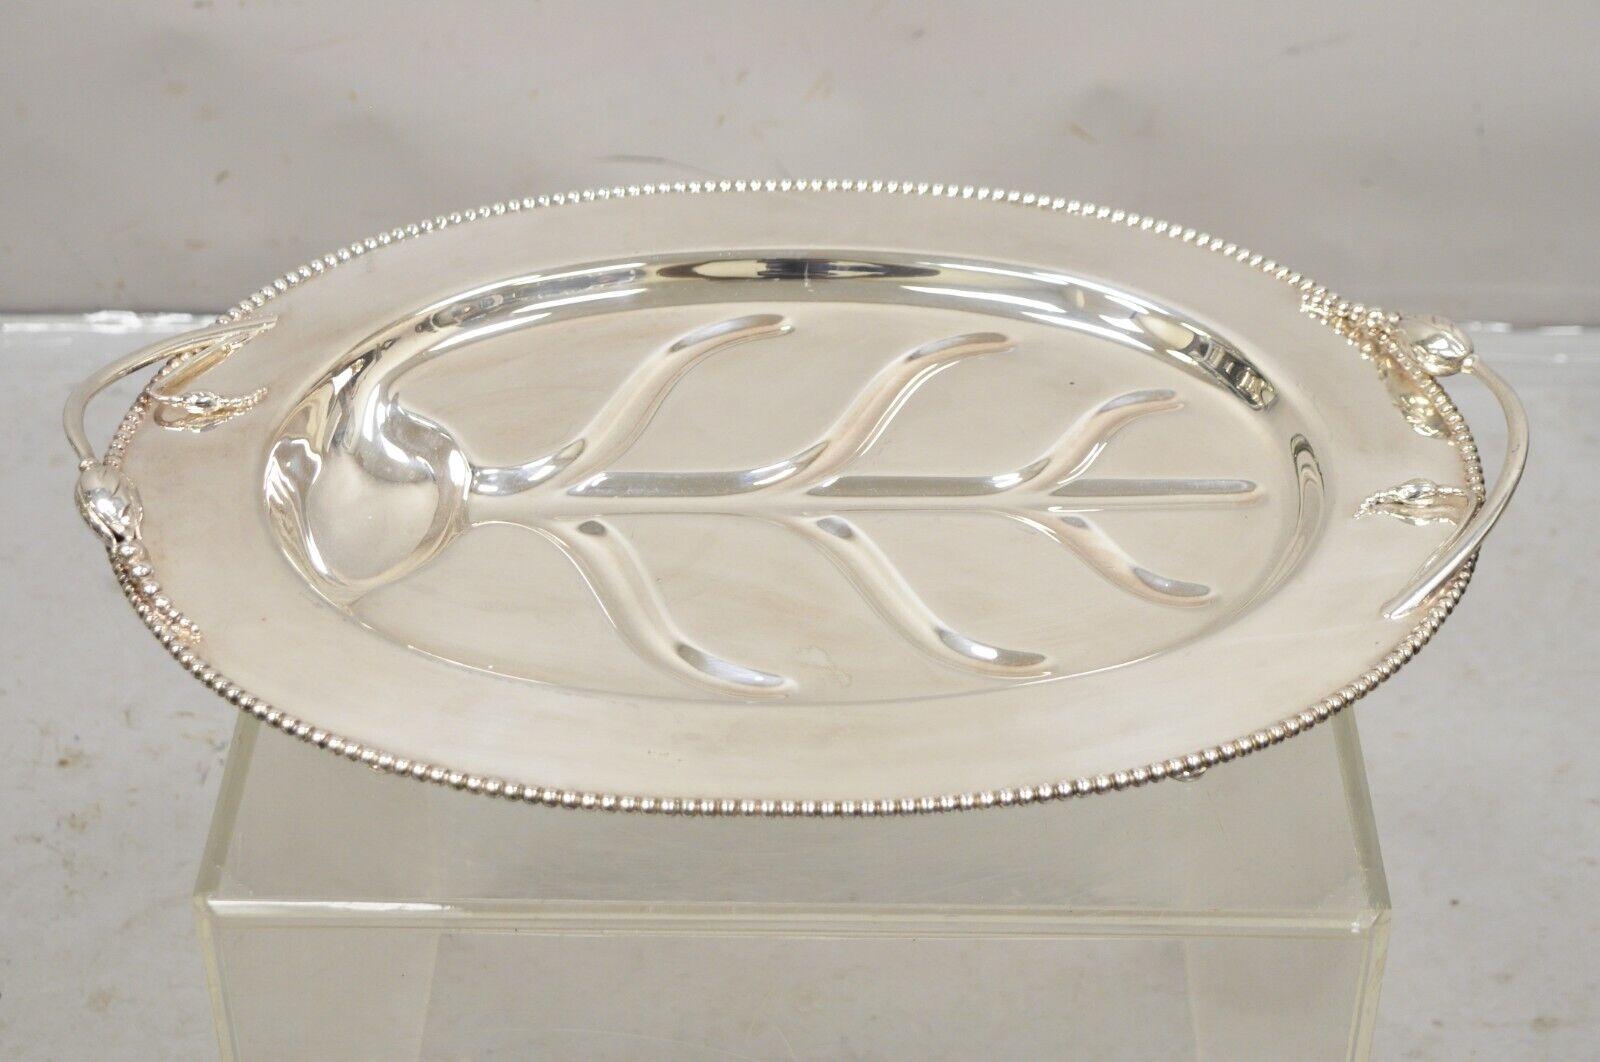 Vintage LBS Co English Art Nouveau Meat Cutlery Silver Plated Serving Platter Tray. Item features a unique raised floral design handles, beaded rim, original hallmark, very nice vintage item. Circa Mid 20th Century. Measurements:  3